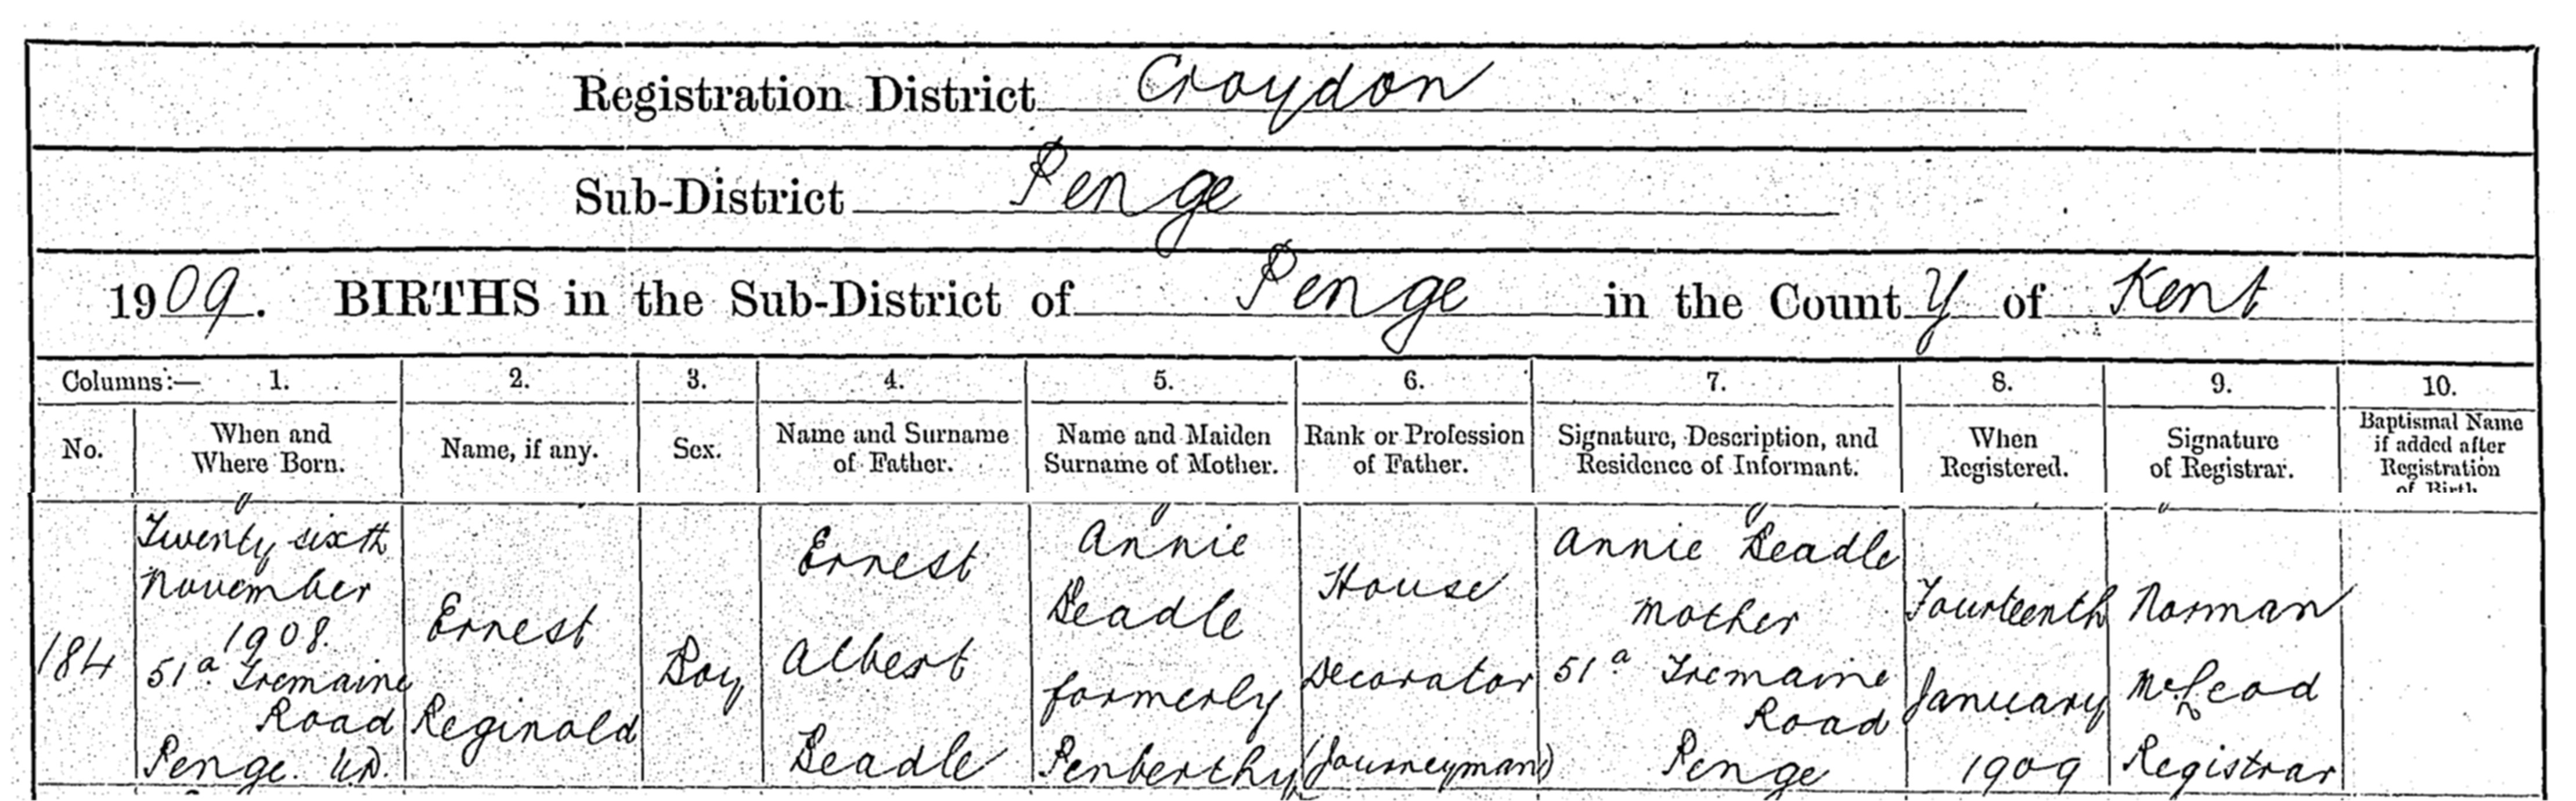 Ernest Reginald Beadle Birth Details